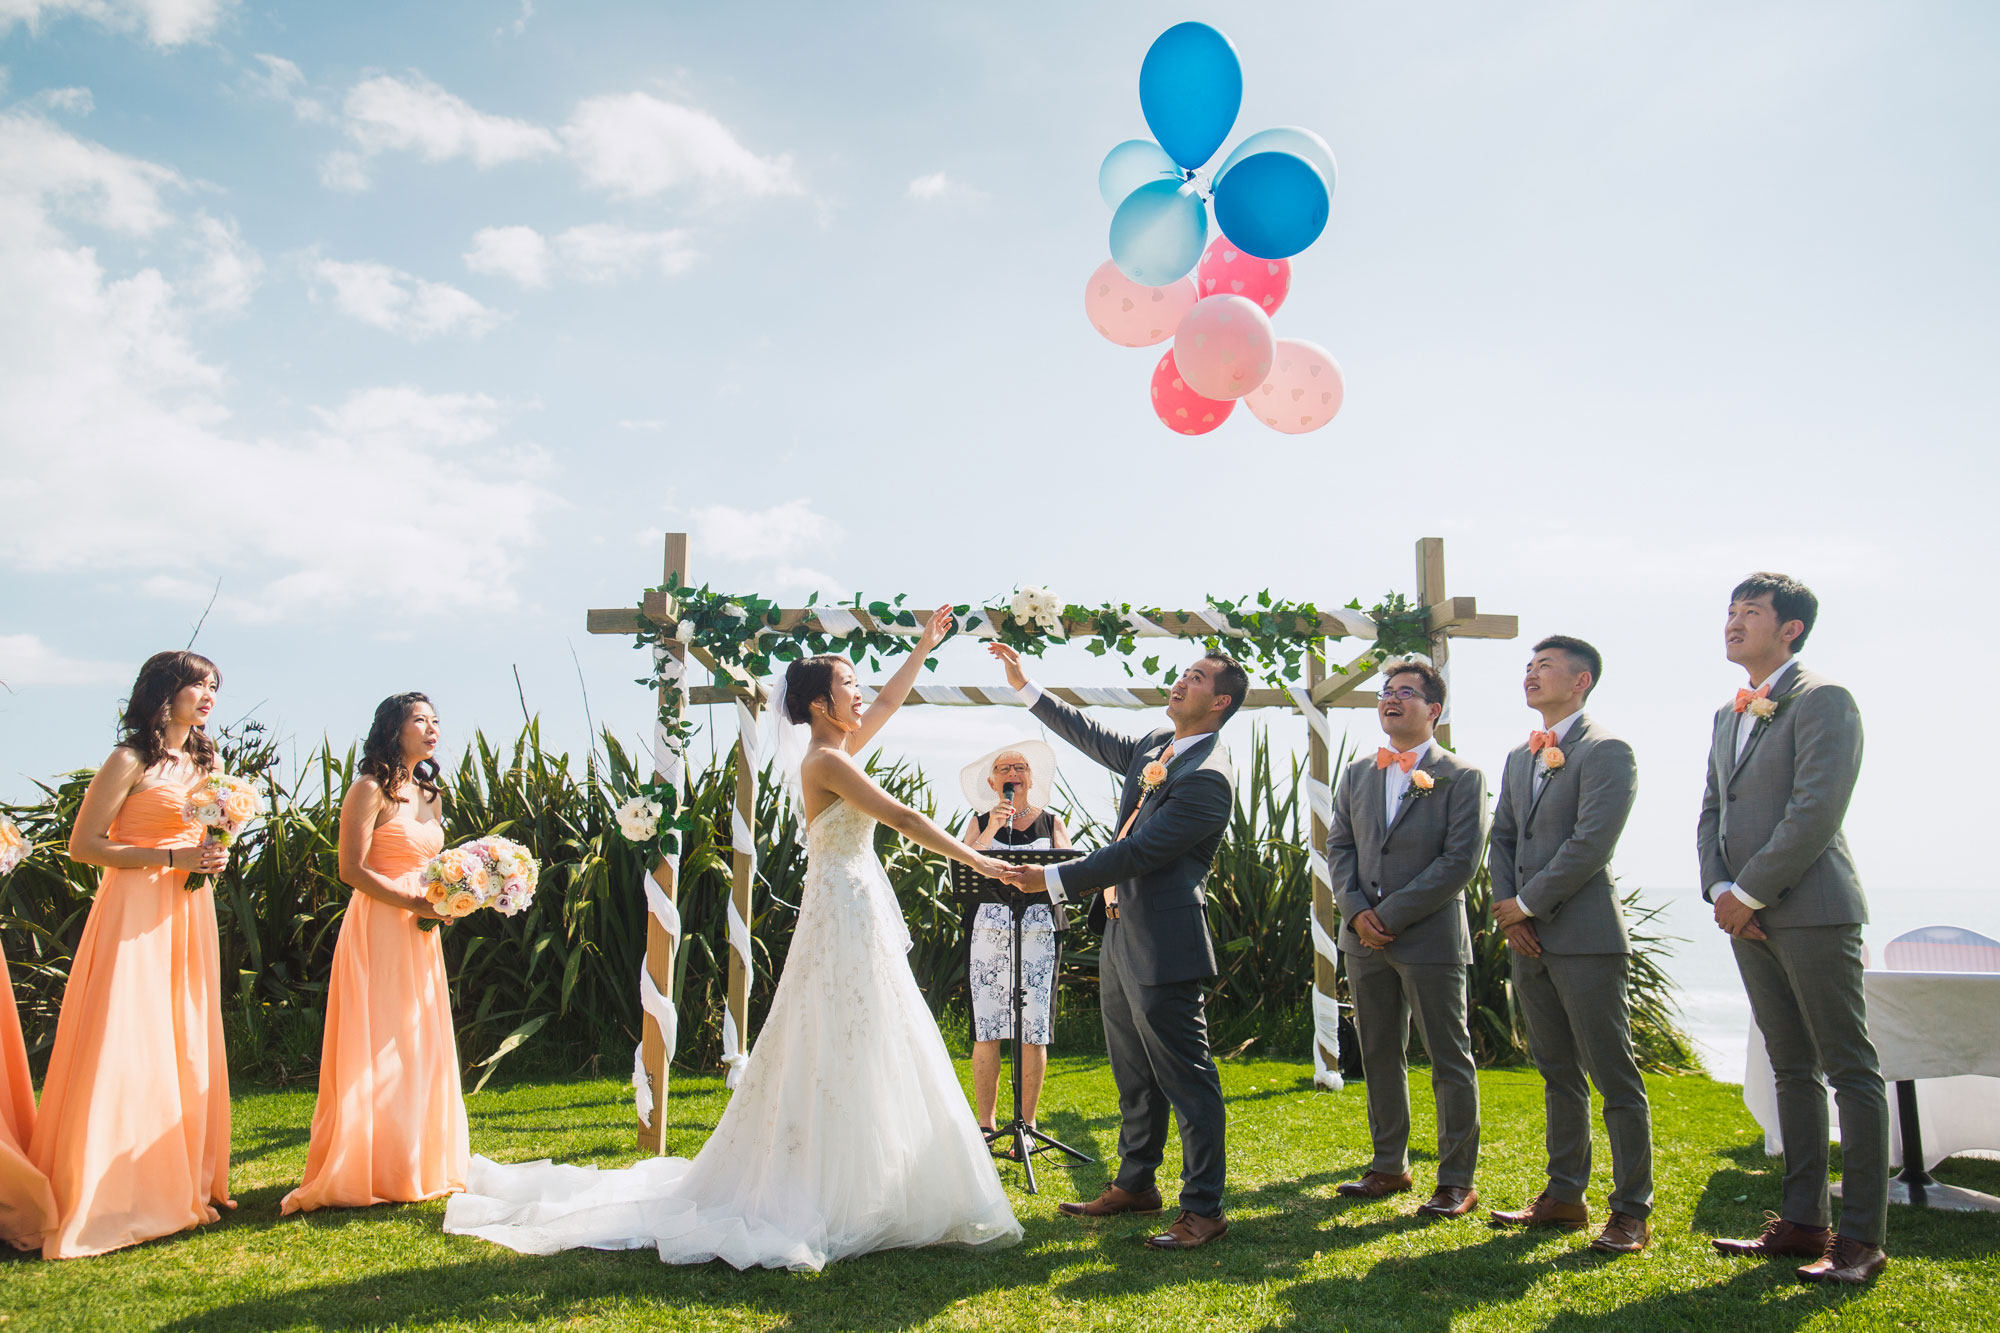 castaways wedding balloon release